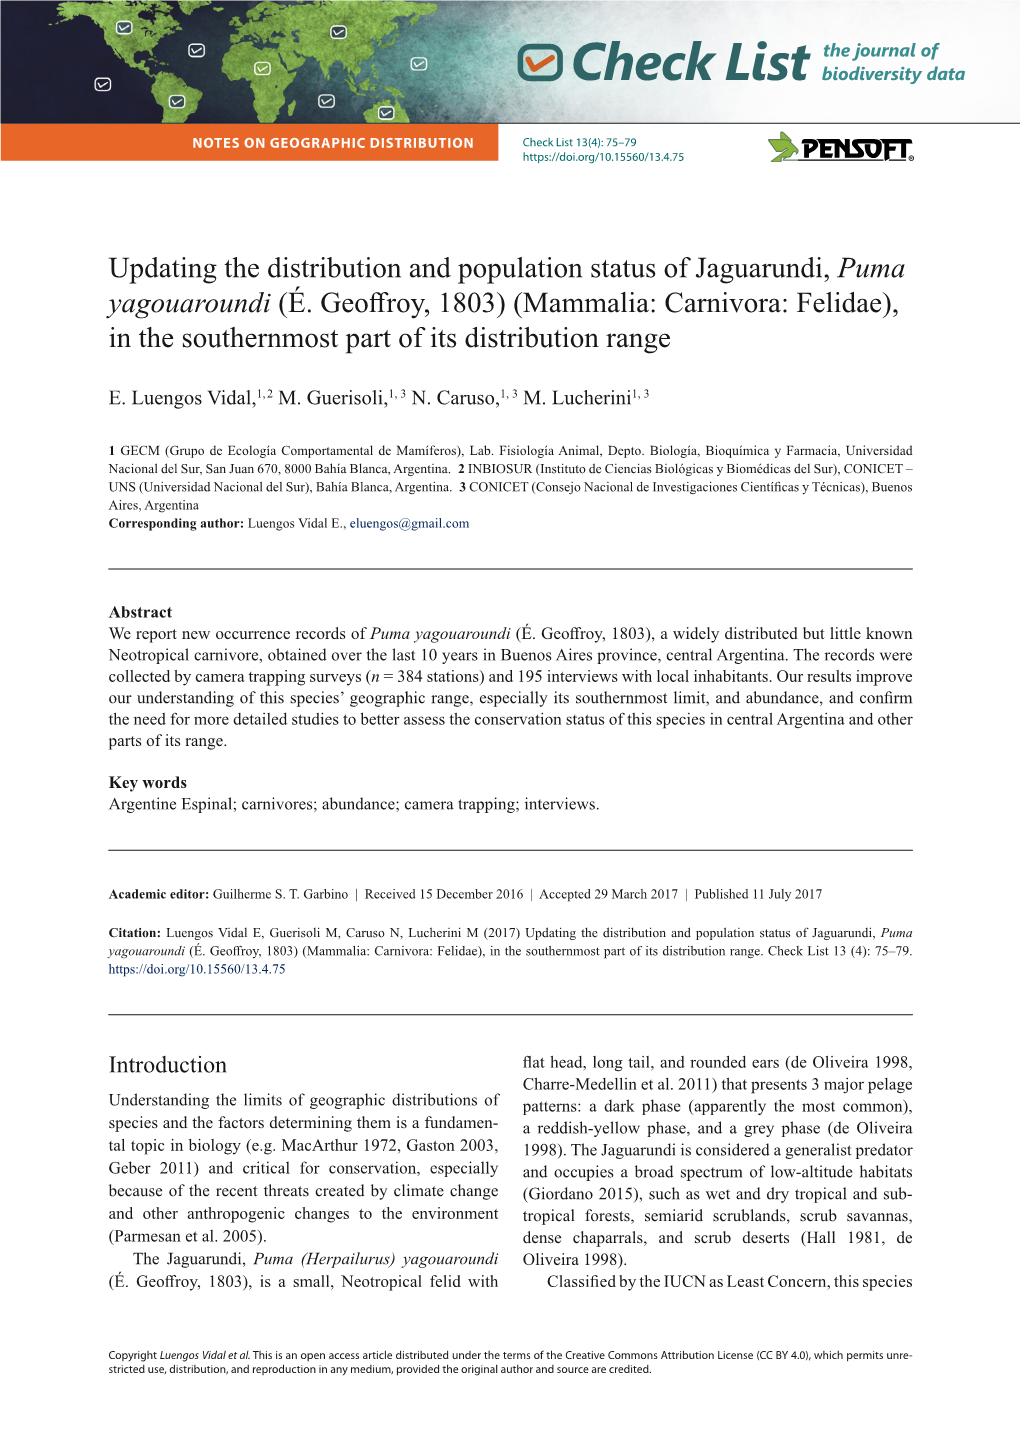 Updating the Distribution and Population Status of Jaguarundi, Puma Yagouaroundi (É